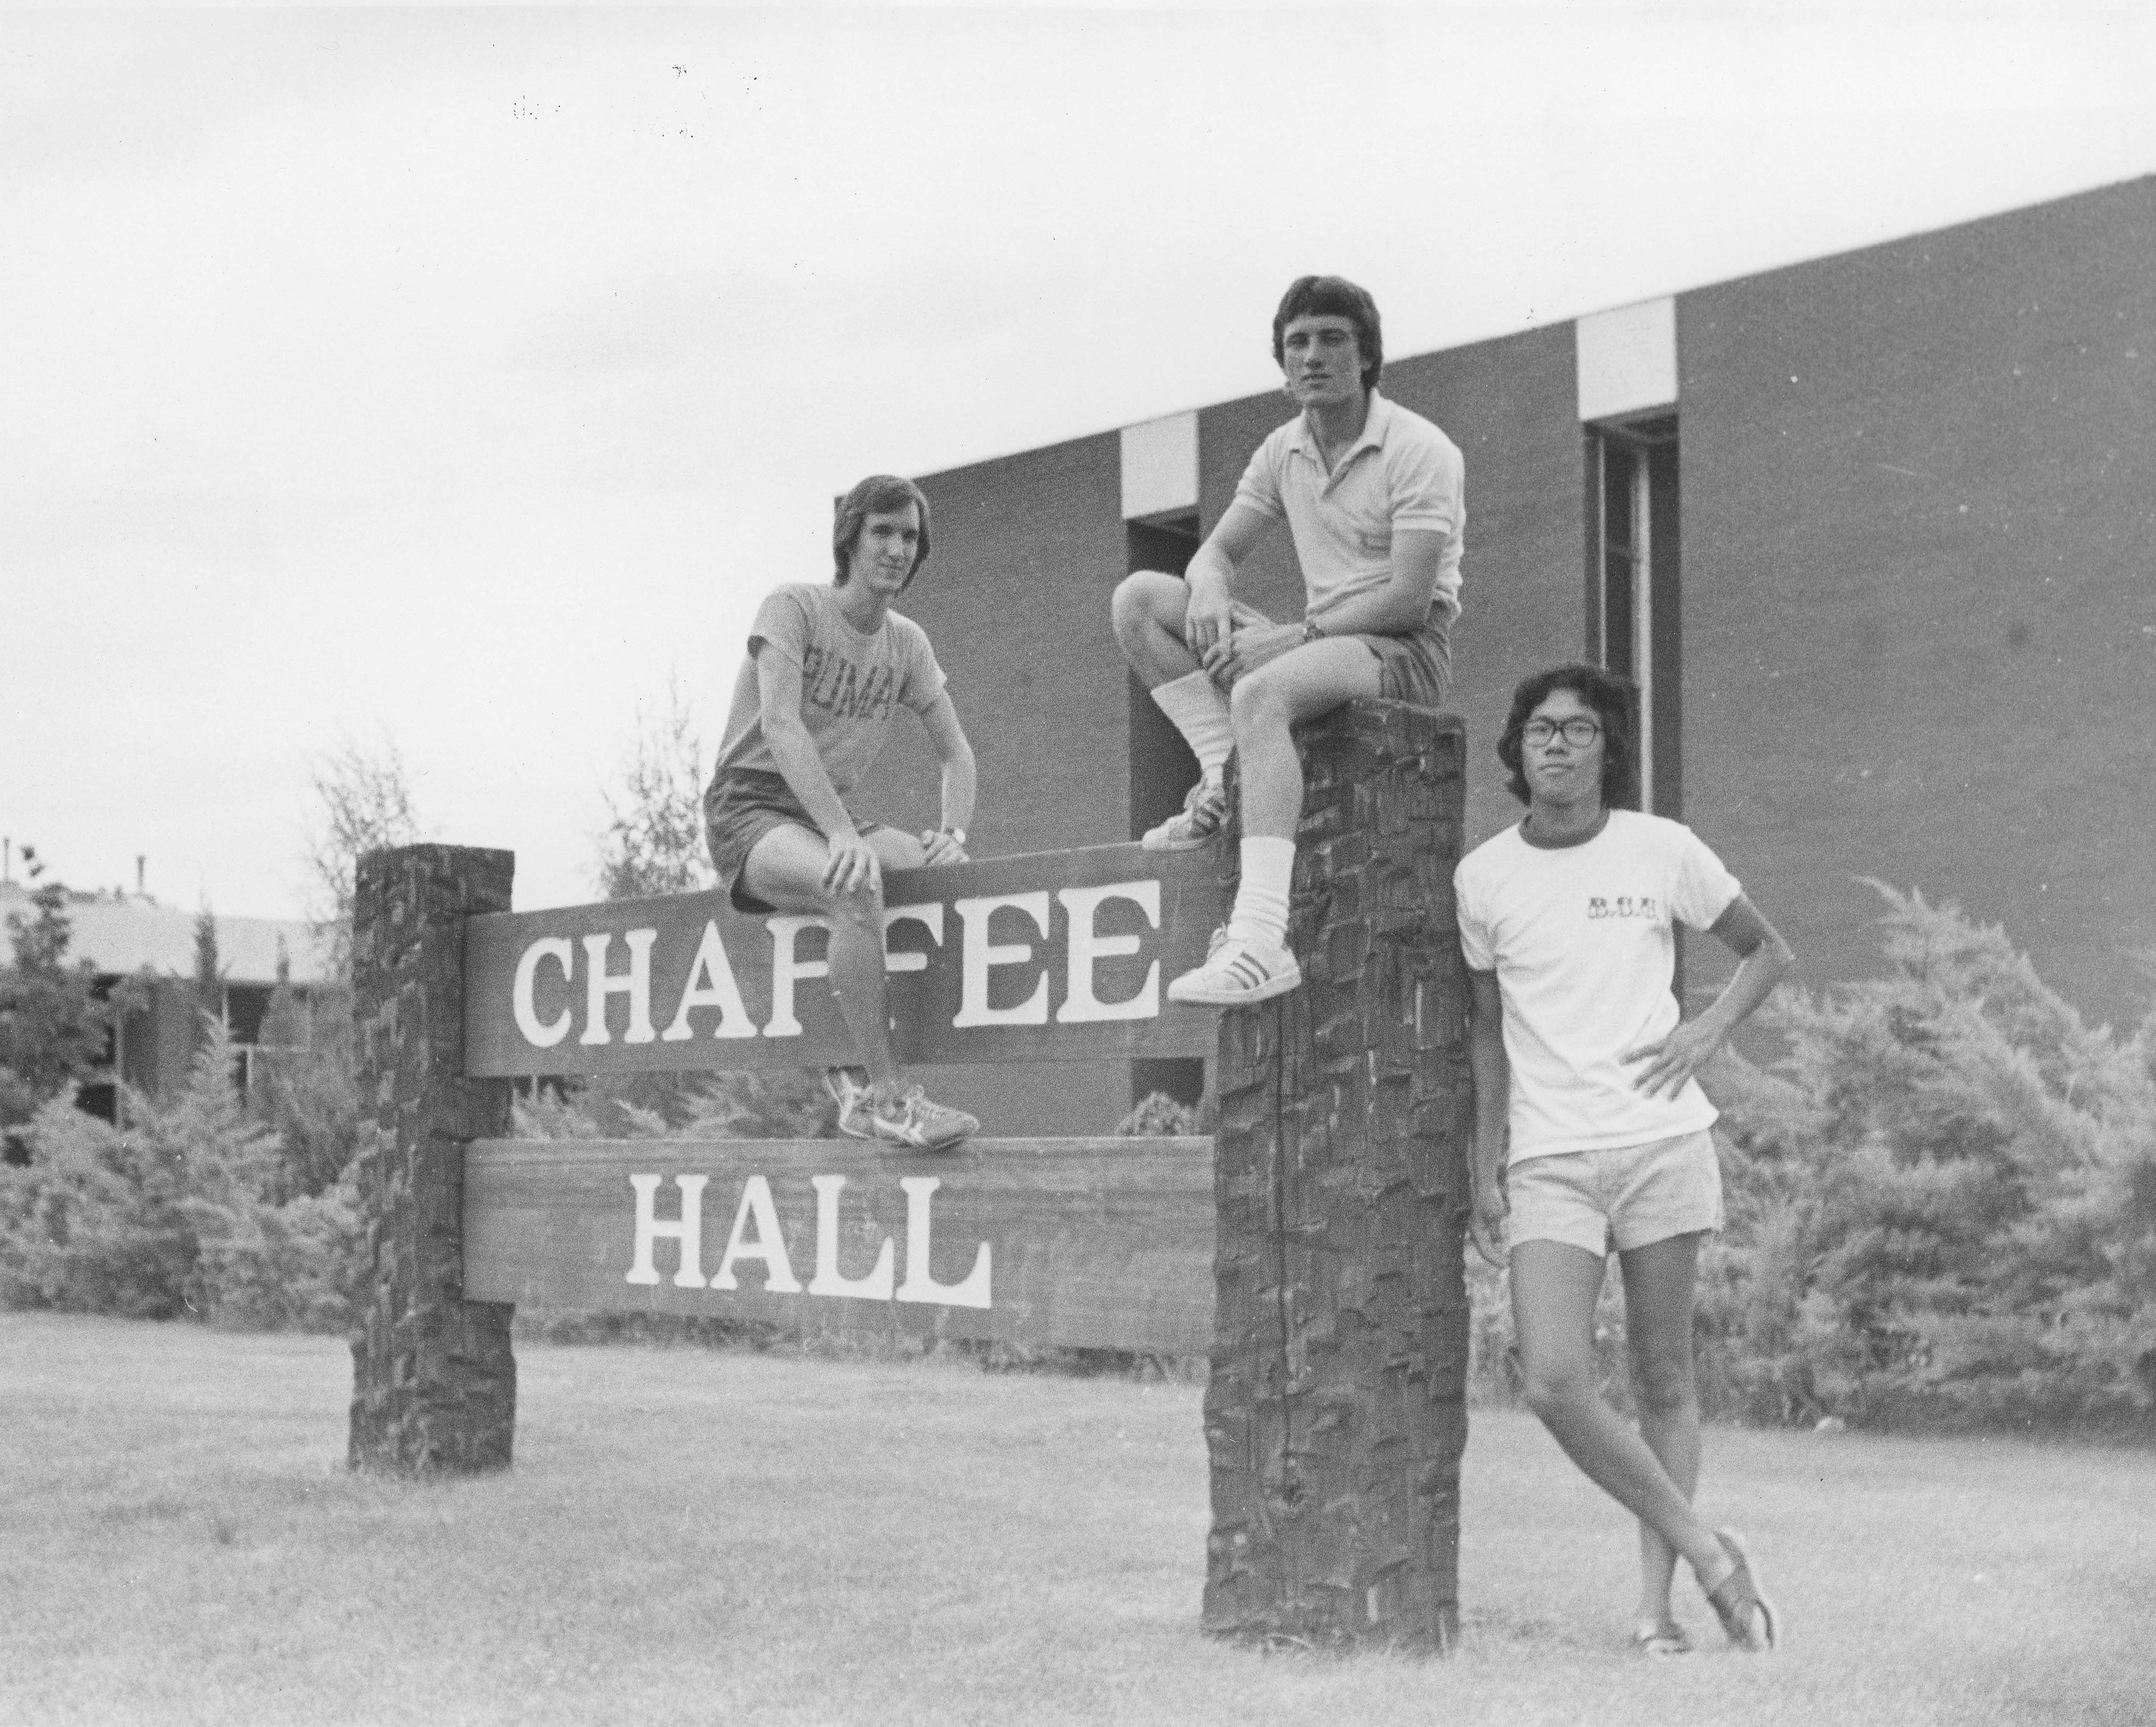 Chaffee Hall sign